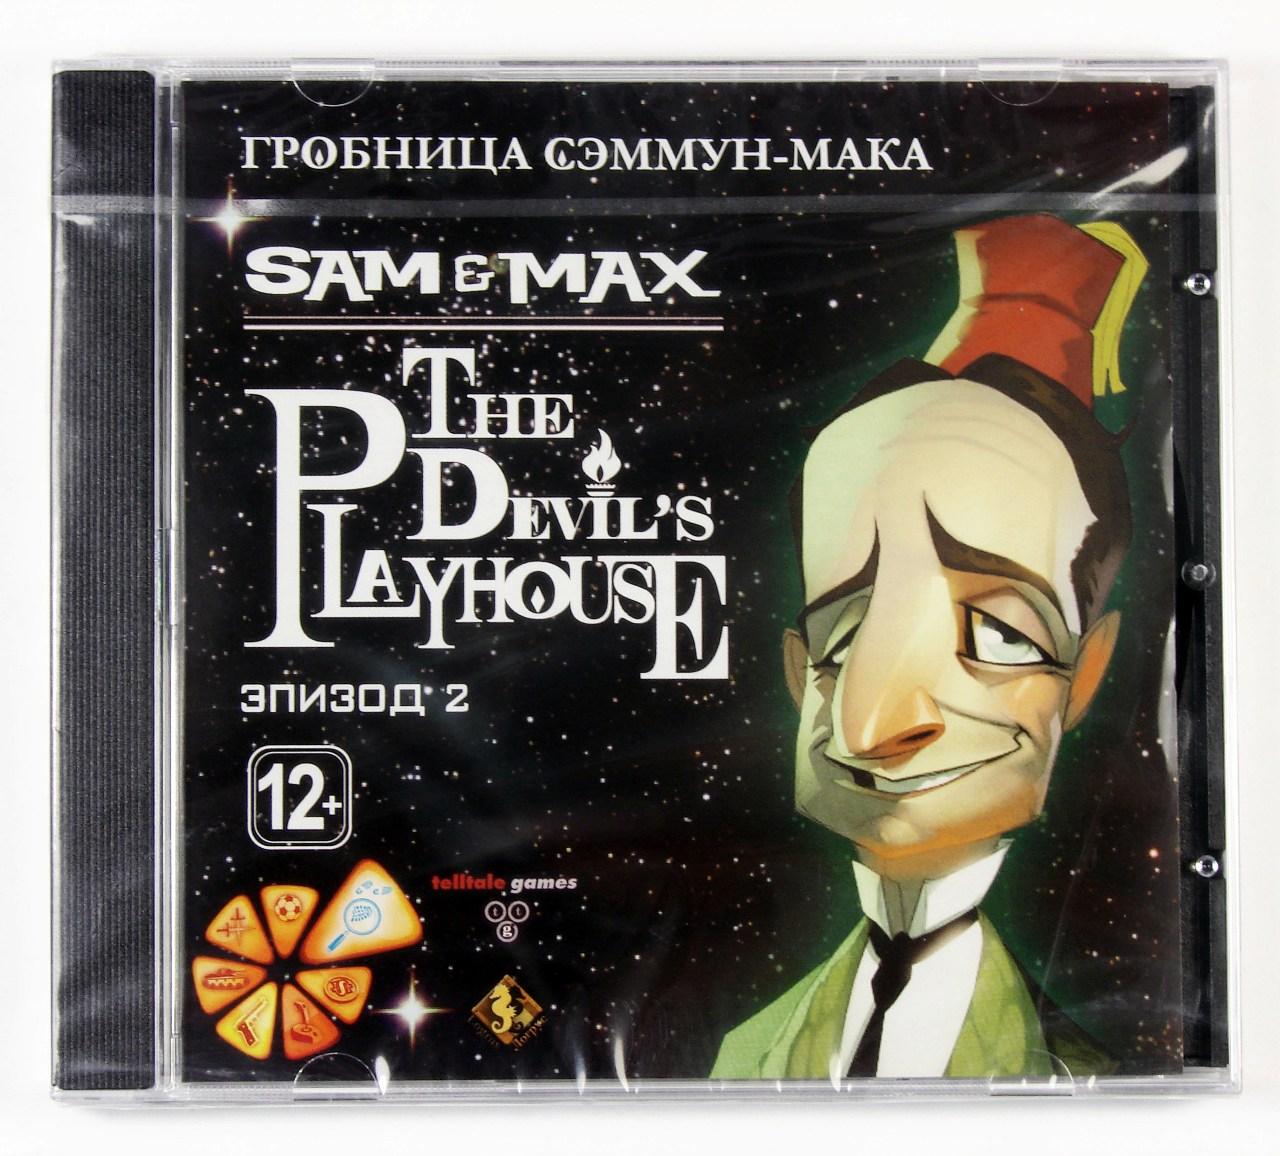 Компьютерный компакт-диск Sam & Max: The Devil’s Playhouse Эпизод 2. Гробница Сэммун-Мака (ПК), фирма "1C", 1 DVD